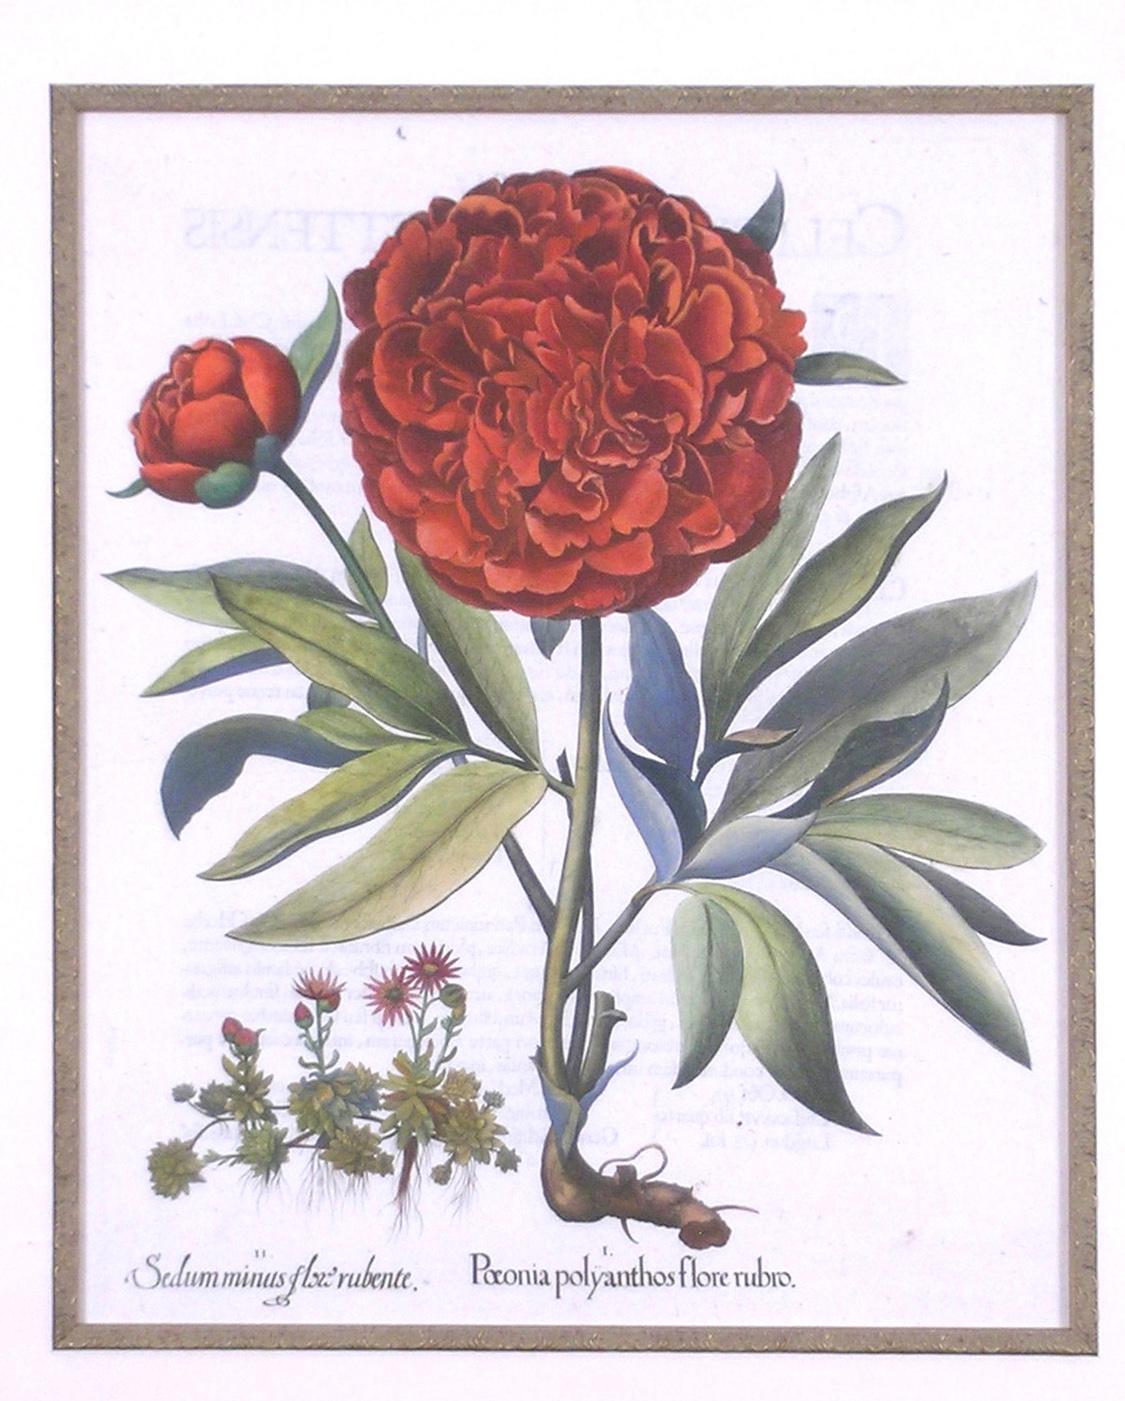 Paeonia polyanthos flore rubro.  Peony - Academic Print by Basilius Besler